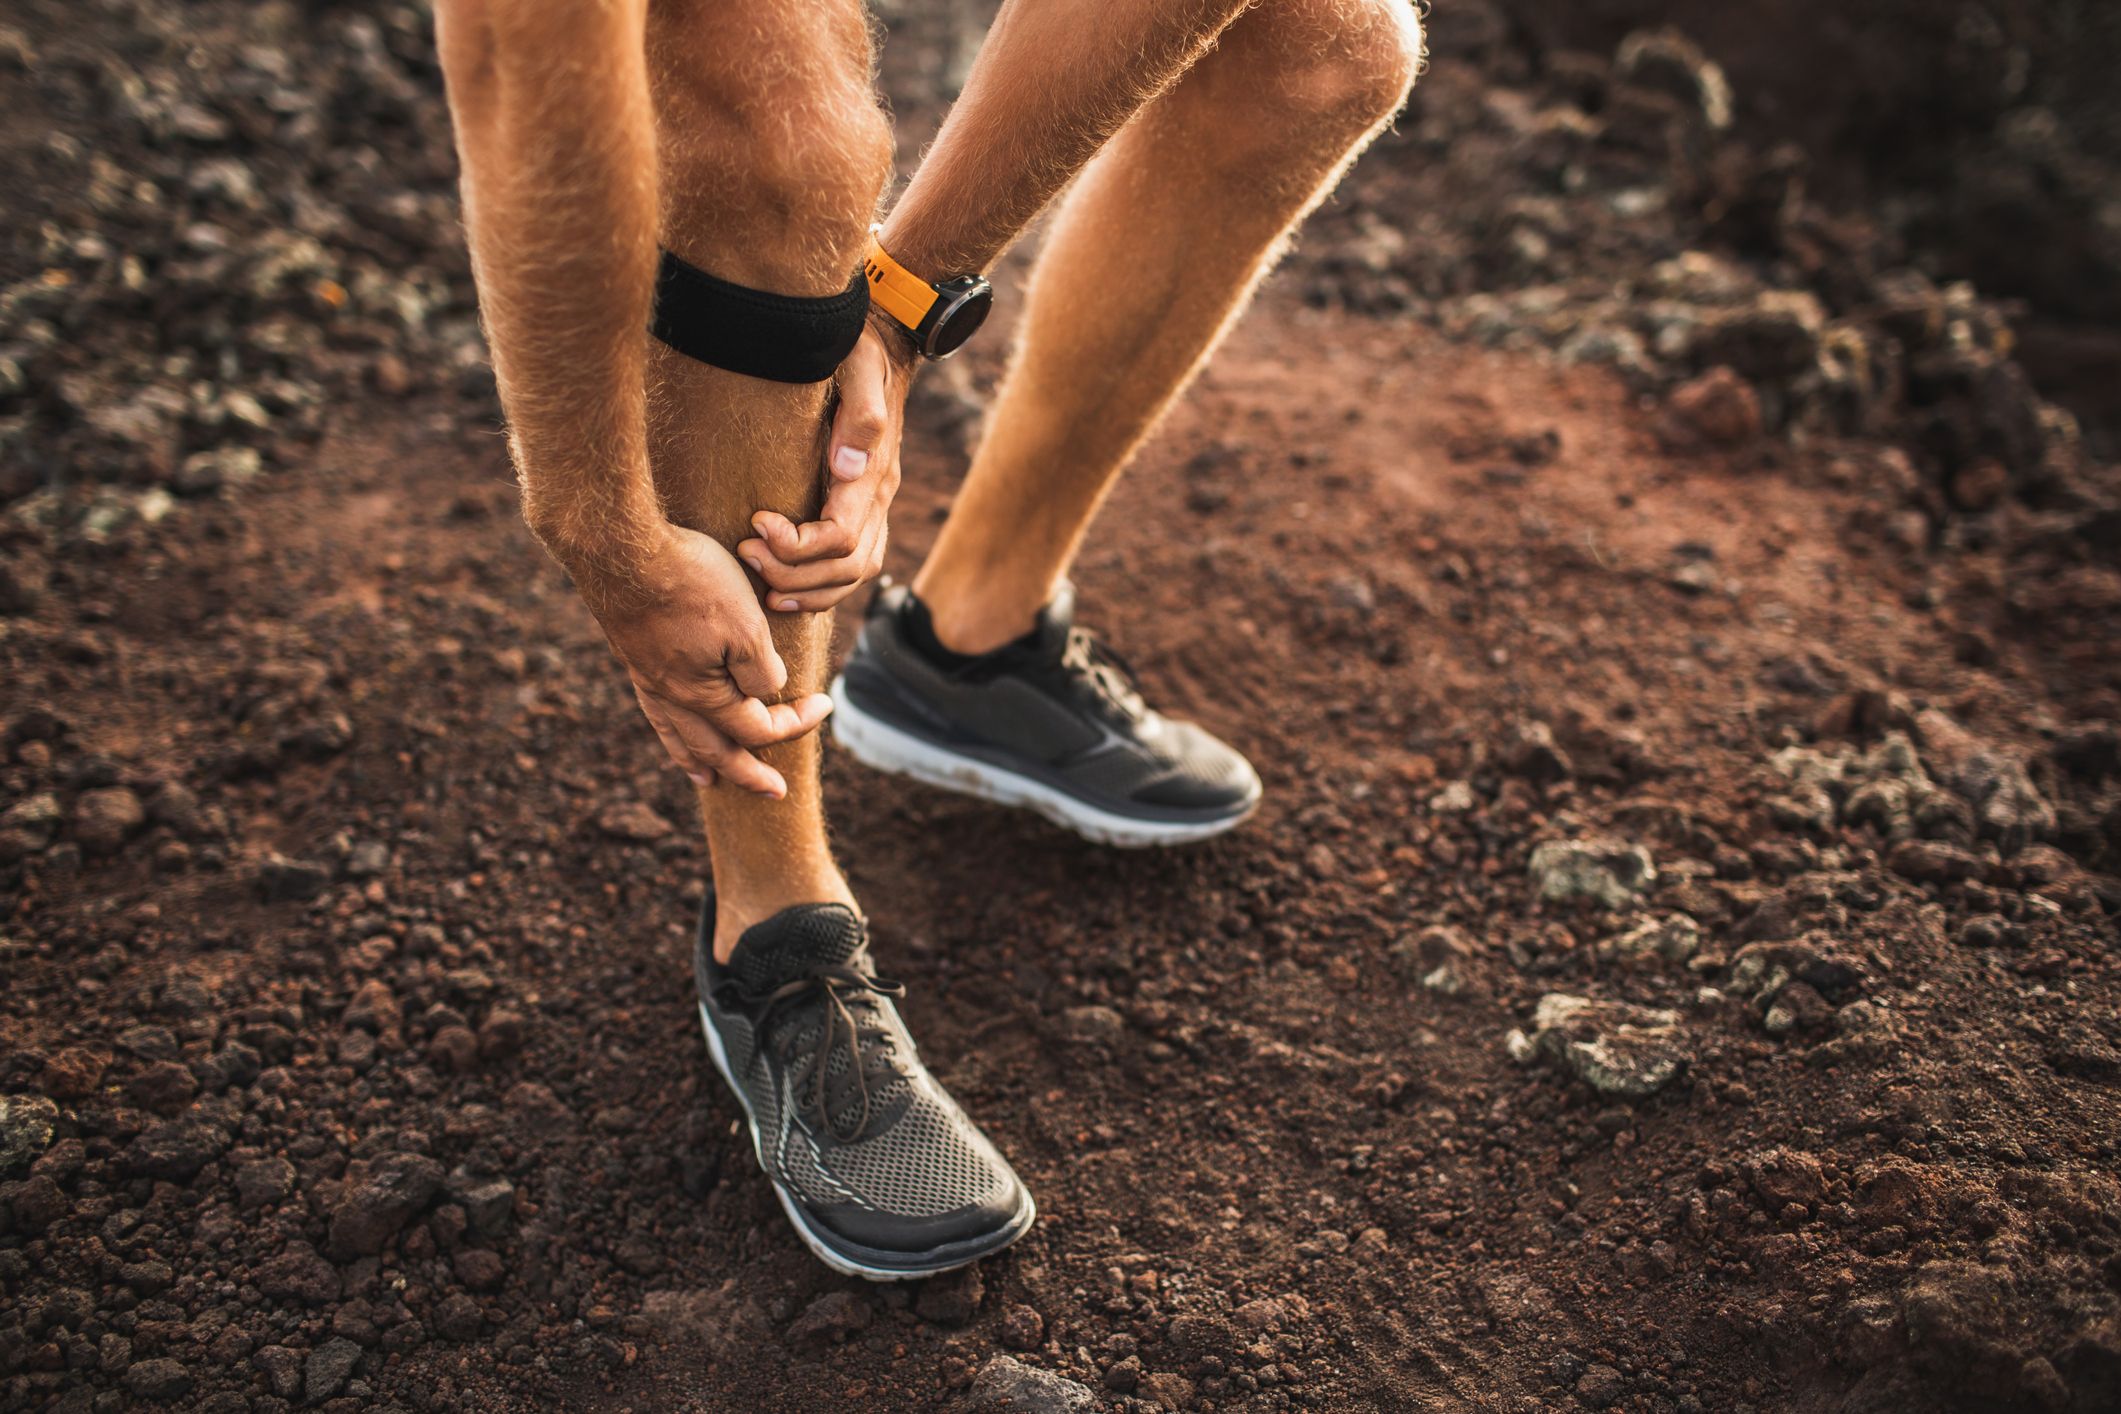 Shin splints treatment: How to overcome shin splints from running